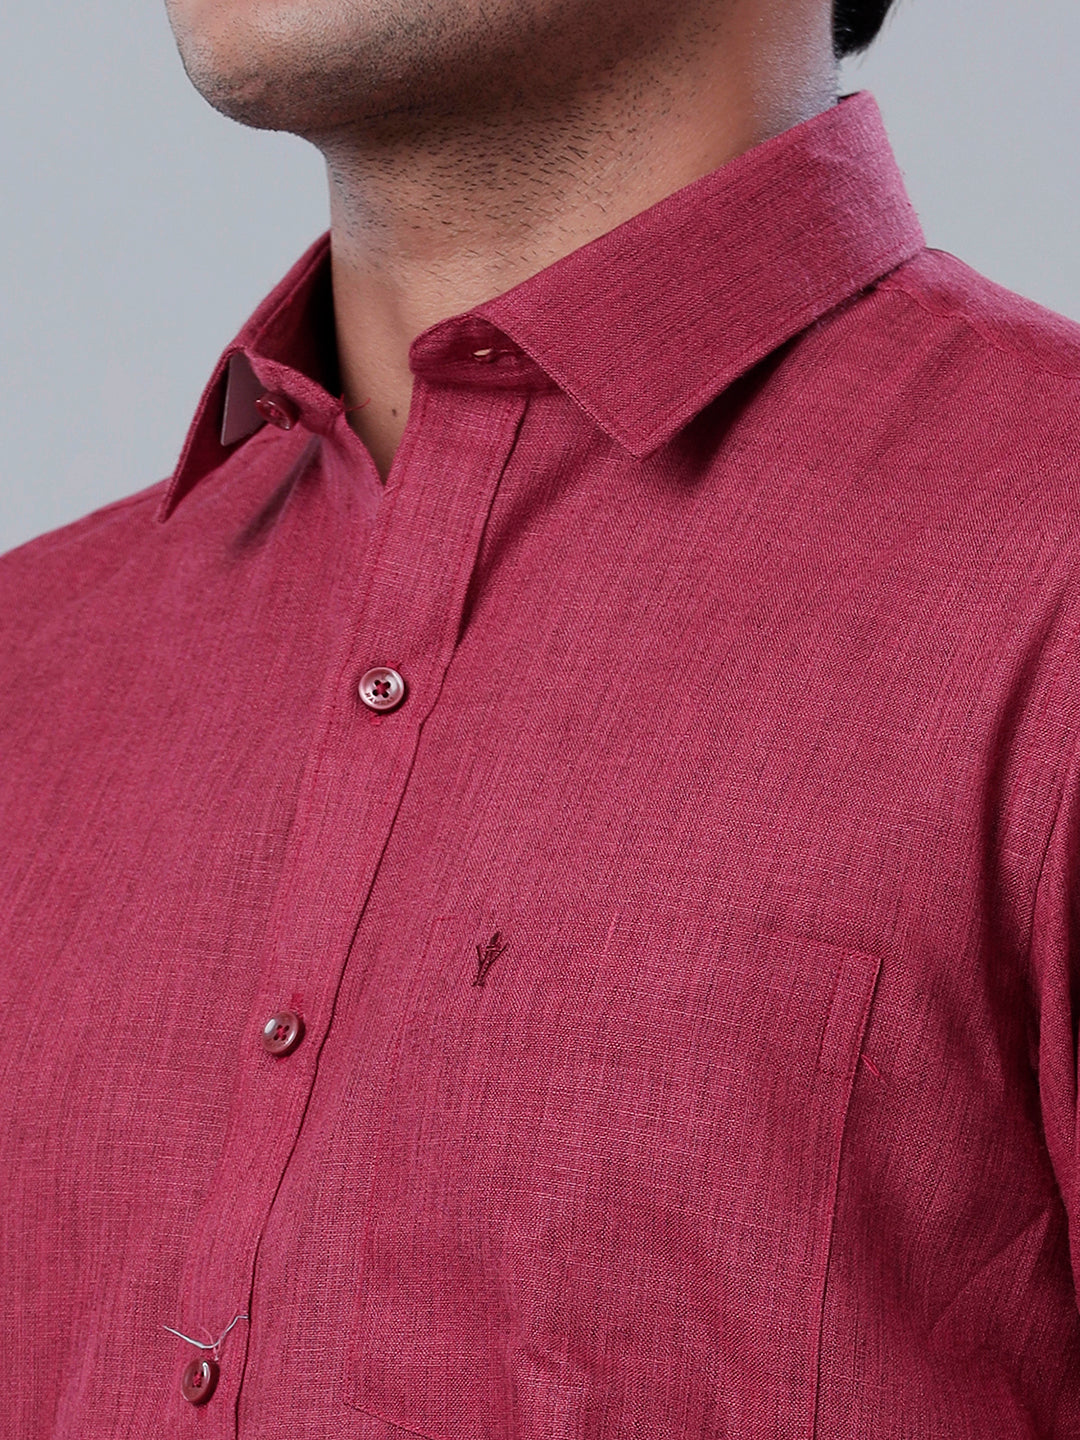 Mens Formal Shirt Full Sleeves Maroon T26 TB10-Zoomview